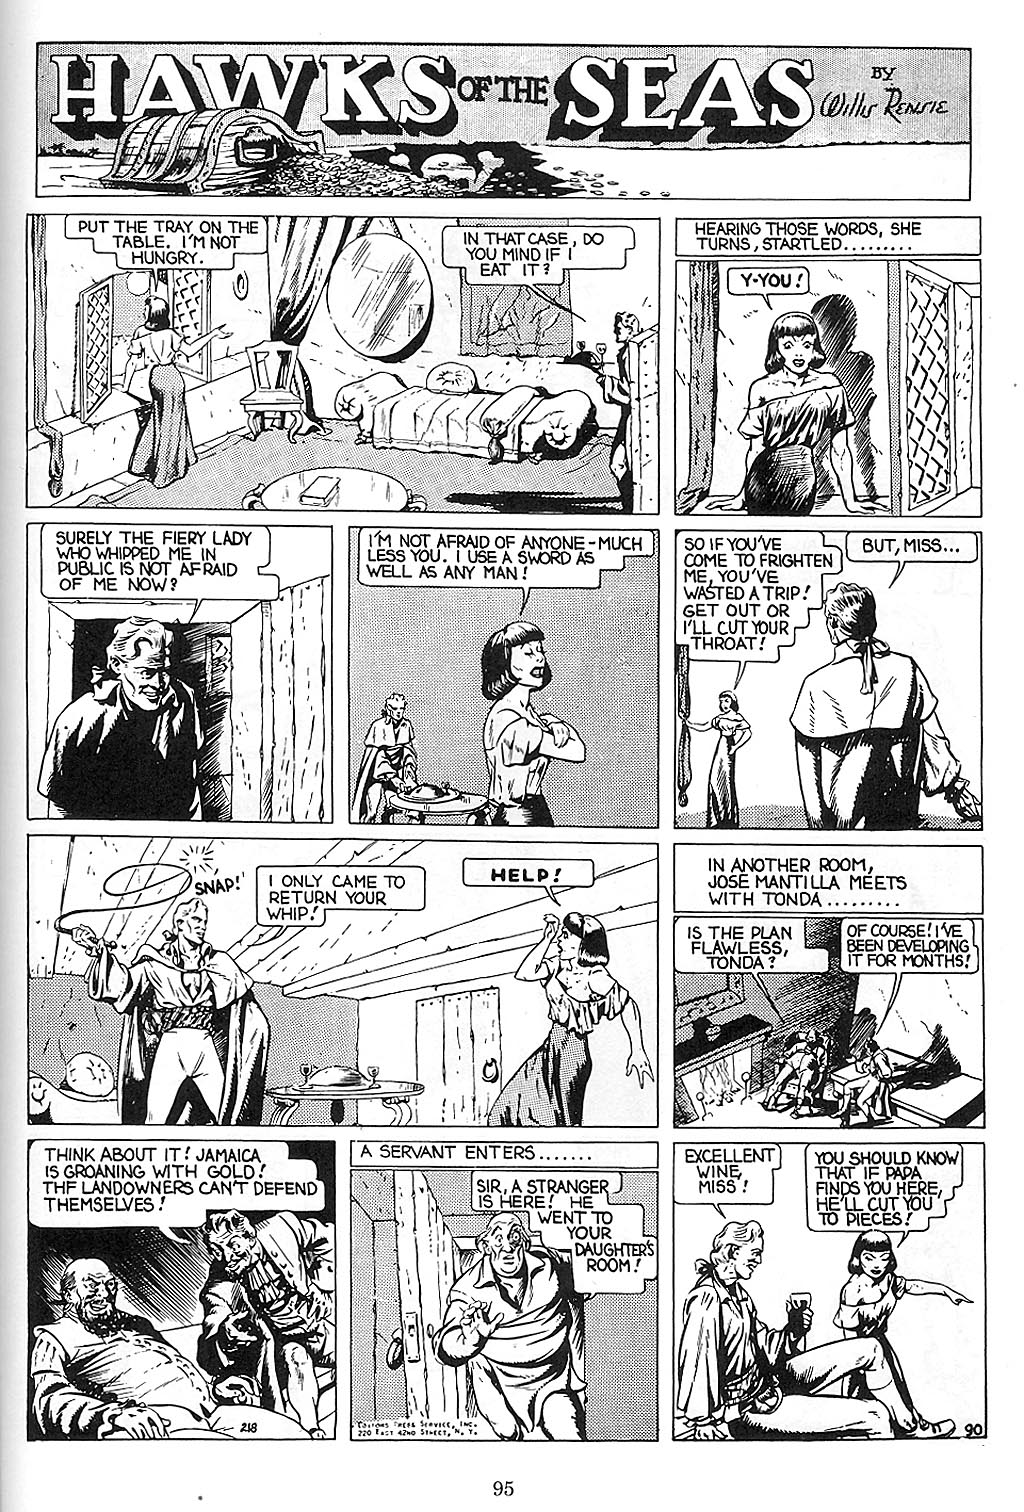 Read online Will Eisner's Hawks of the Seas comic -  Issue # TPB - 96